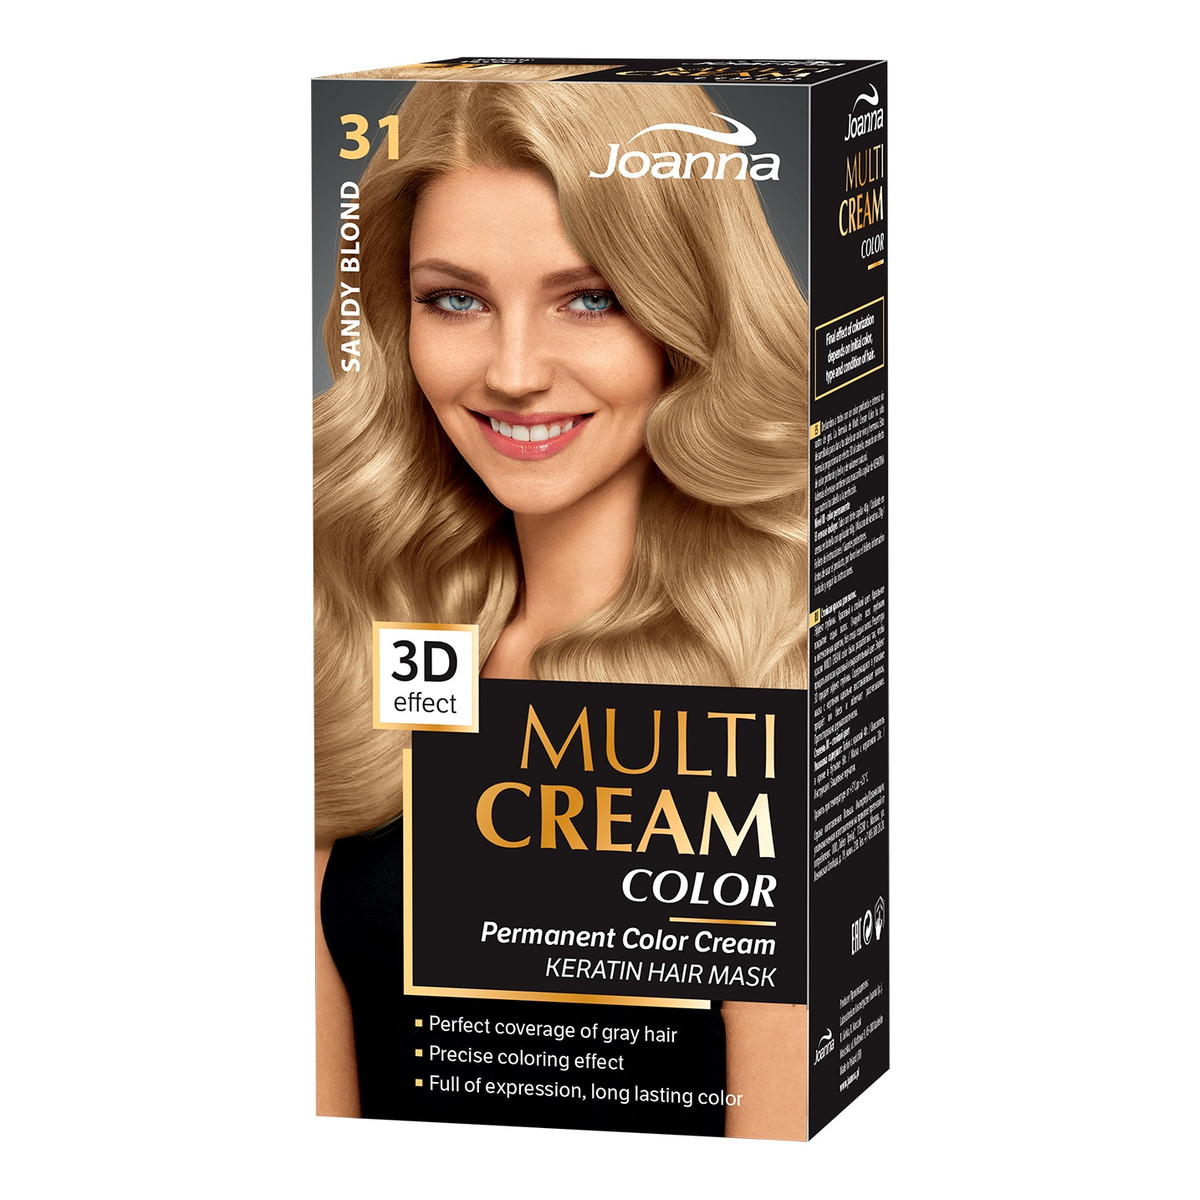 Joanna Multi Cream Color Farba Do Włosów